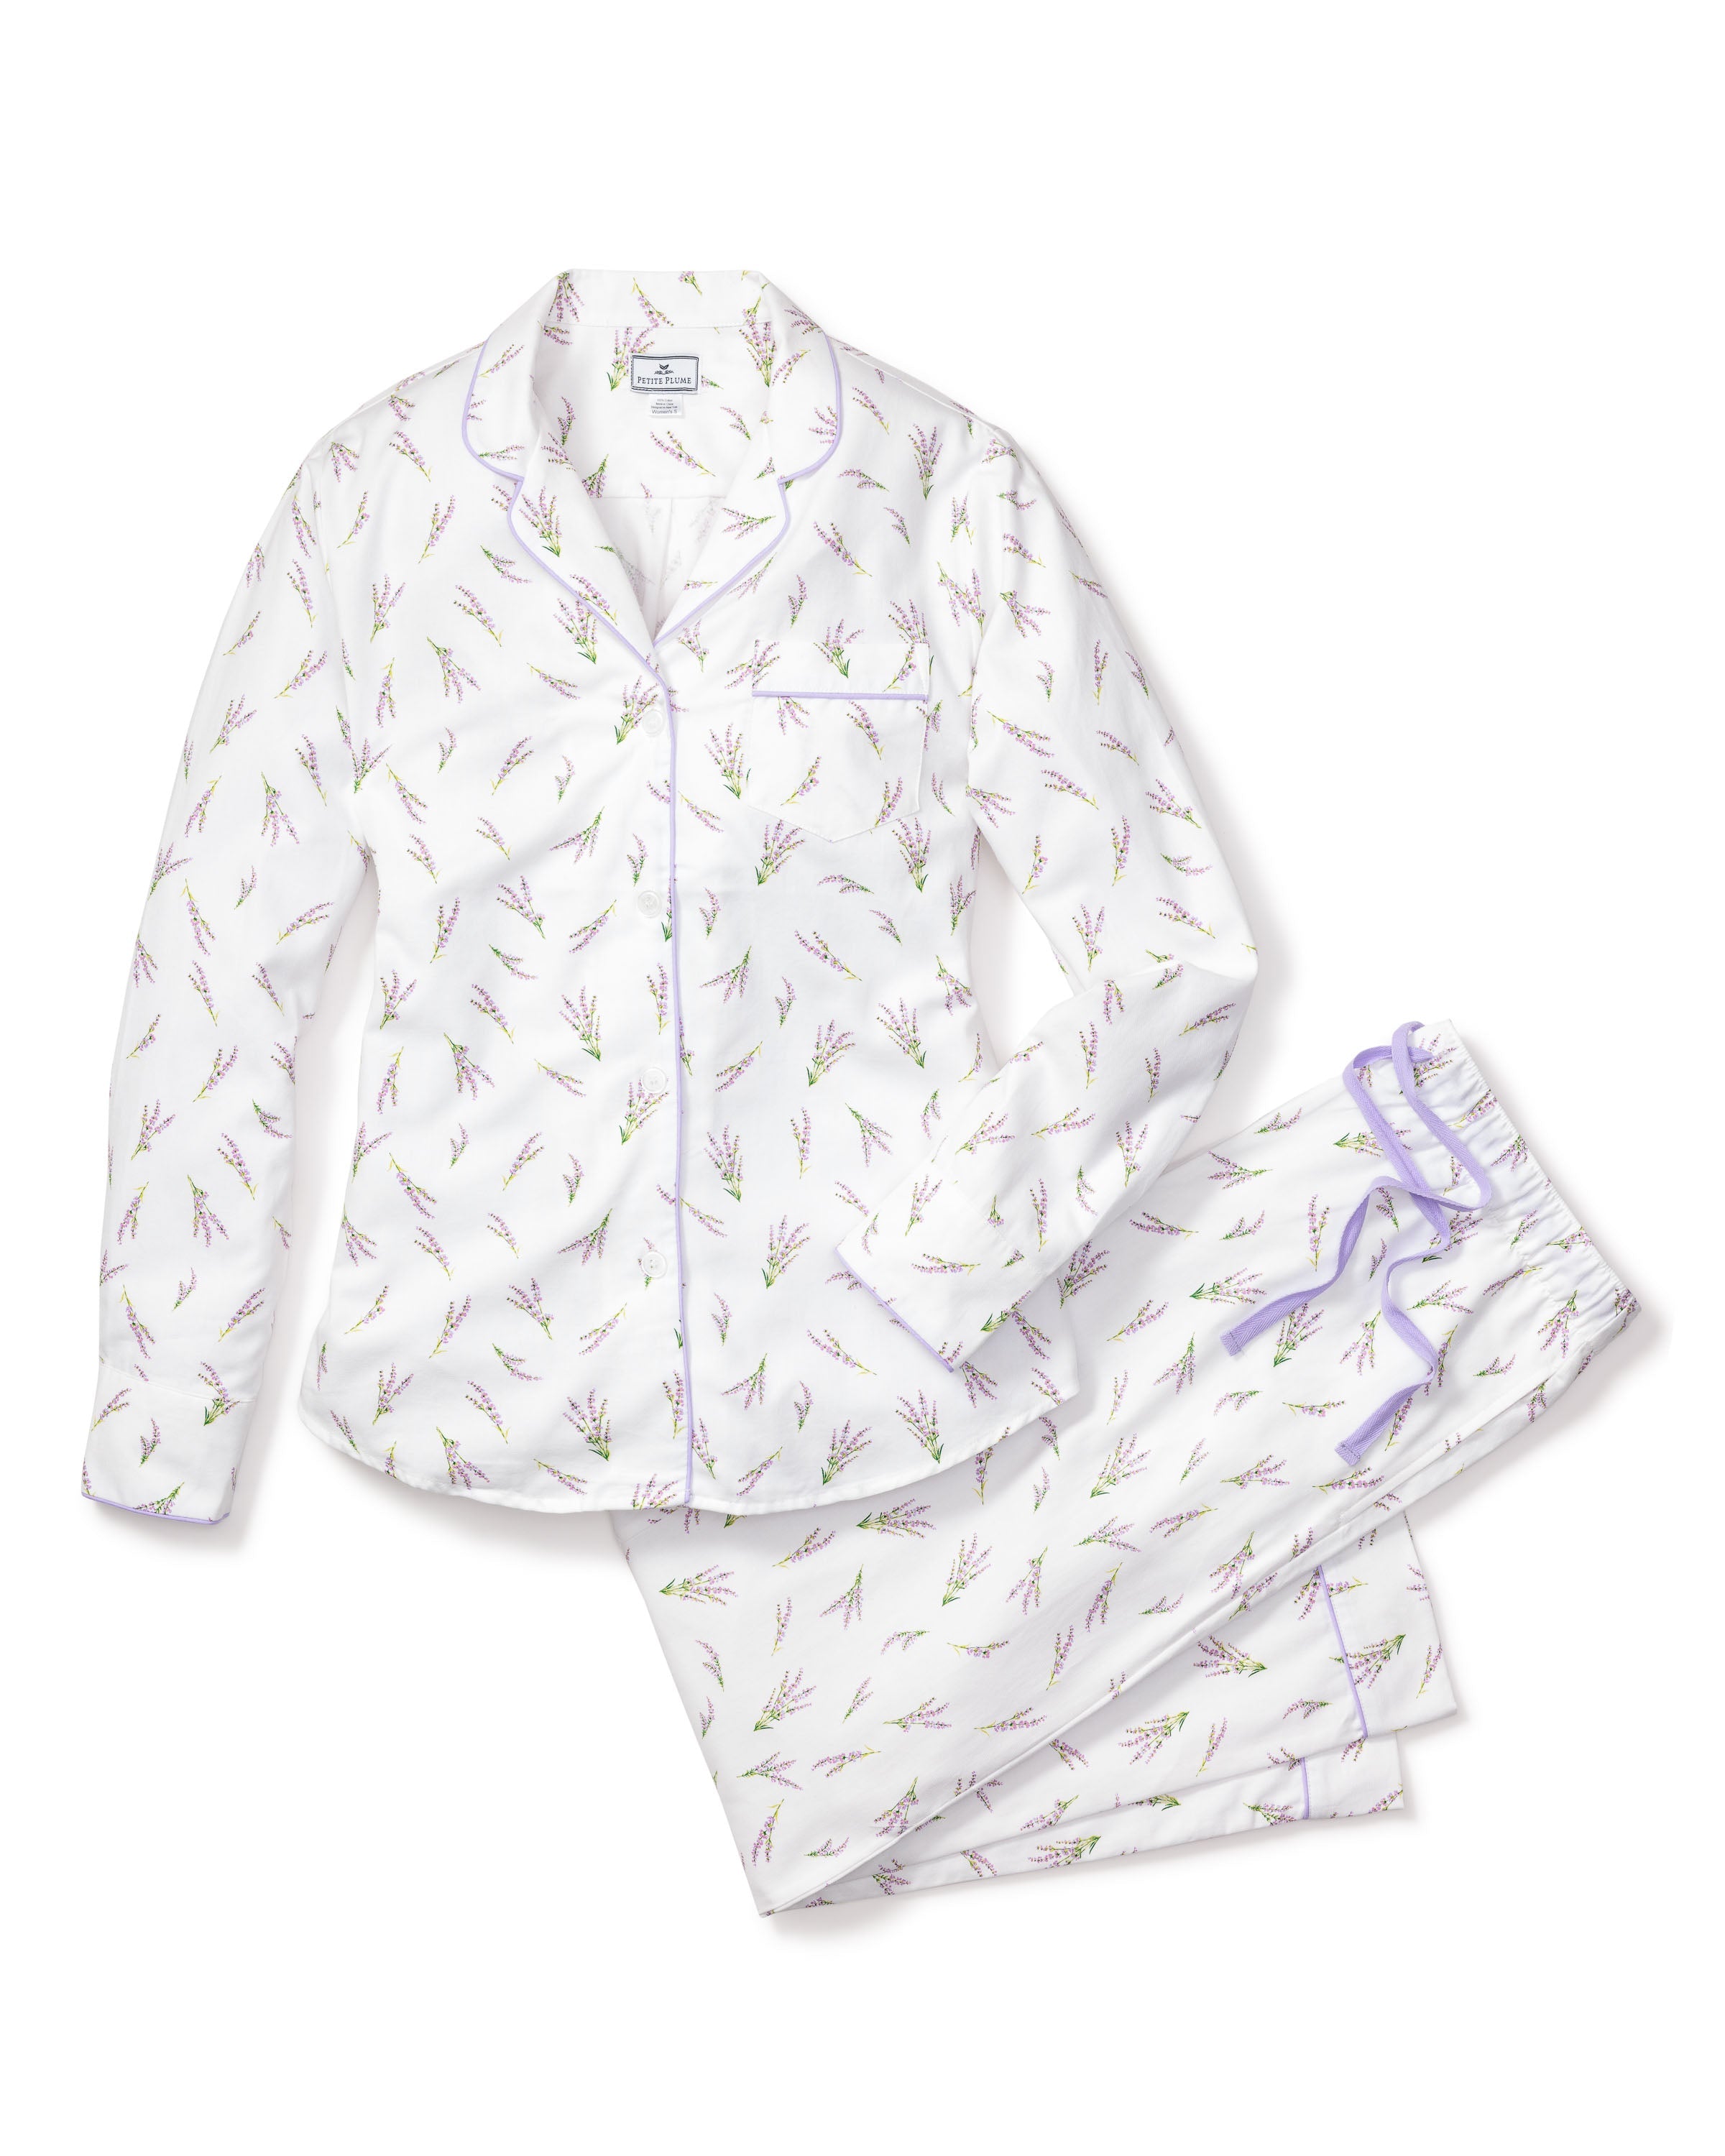 Women's Twill Pajama Set in Fields of Provence